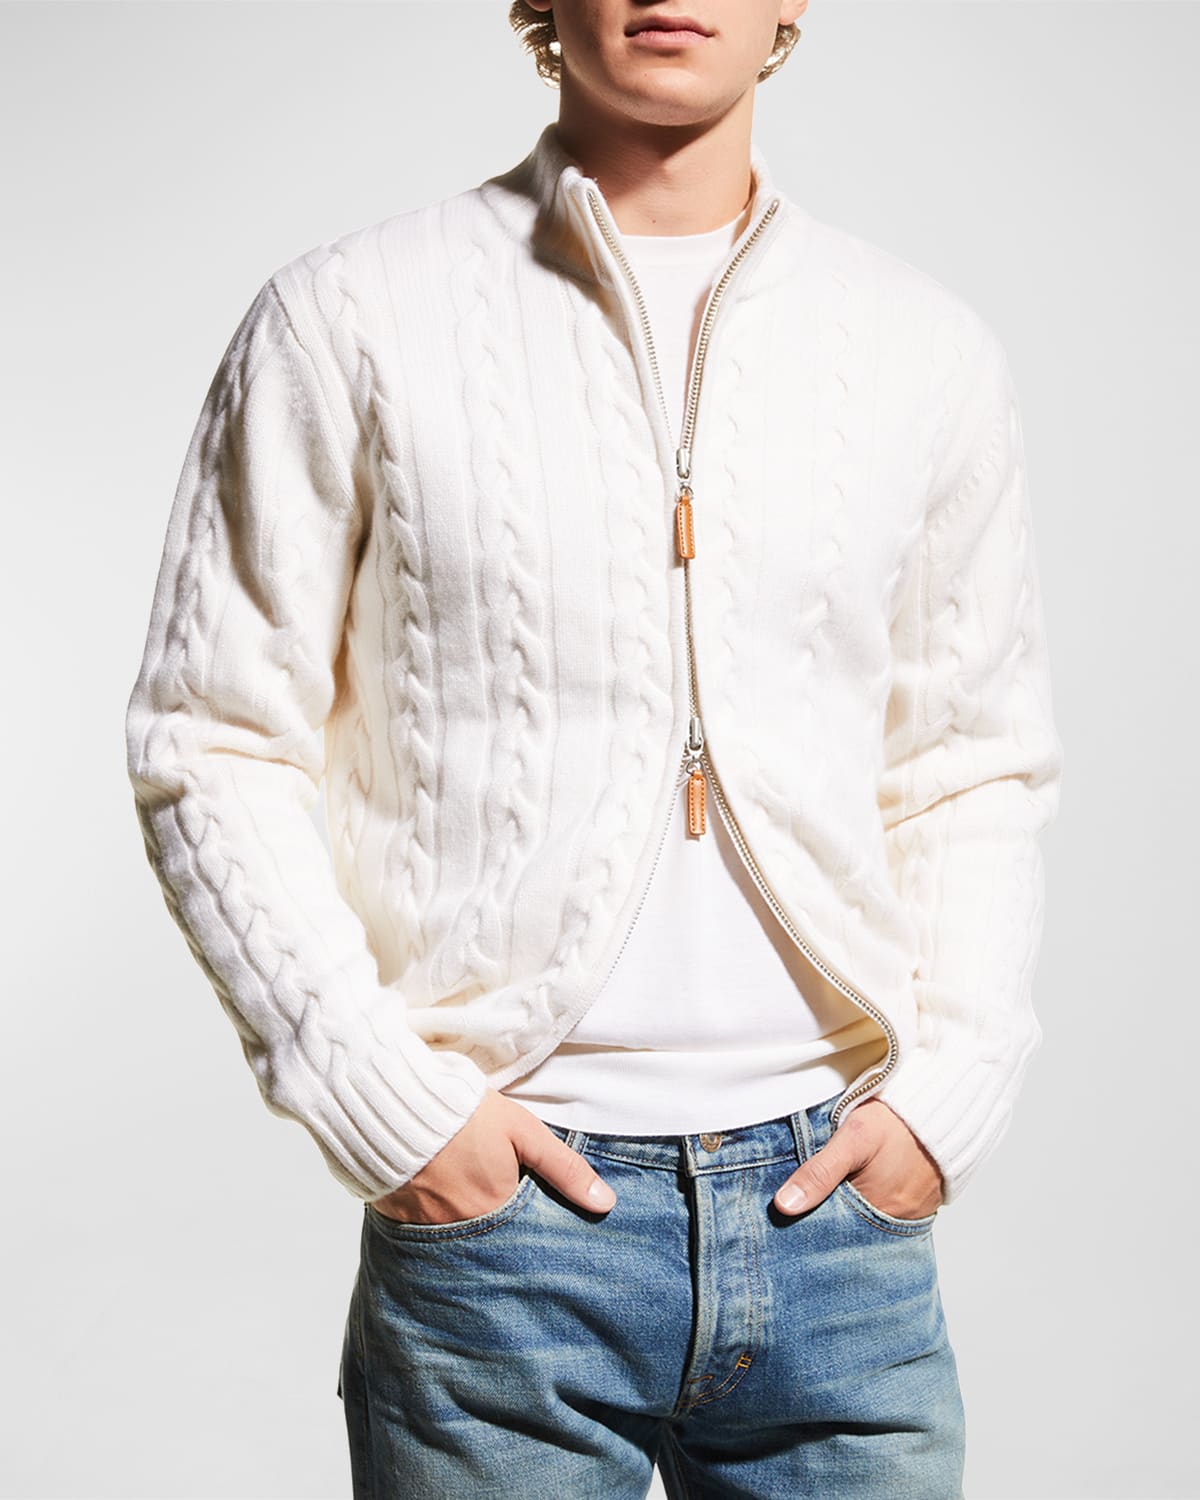 Men's Merino Wool-Cashmere Full-Zip Cable Sweater